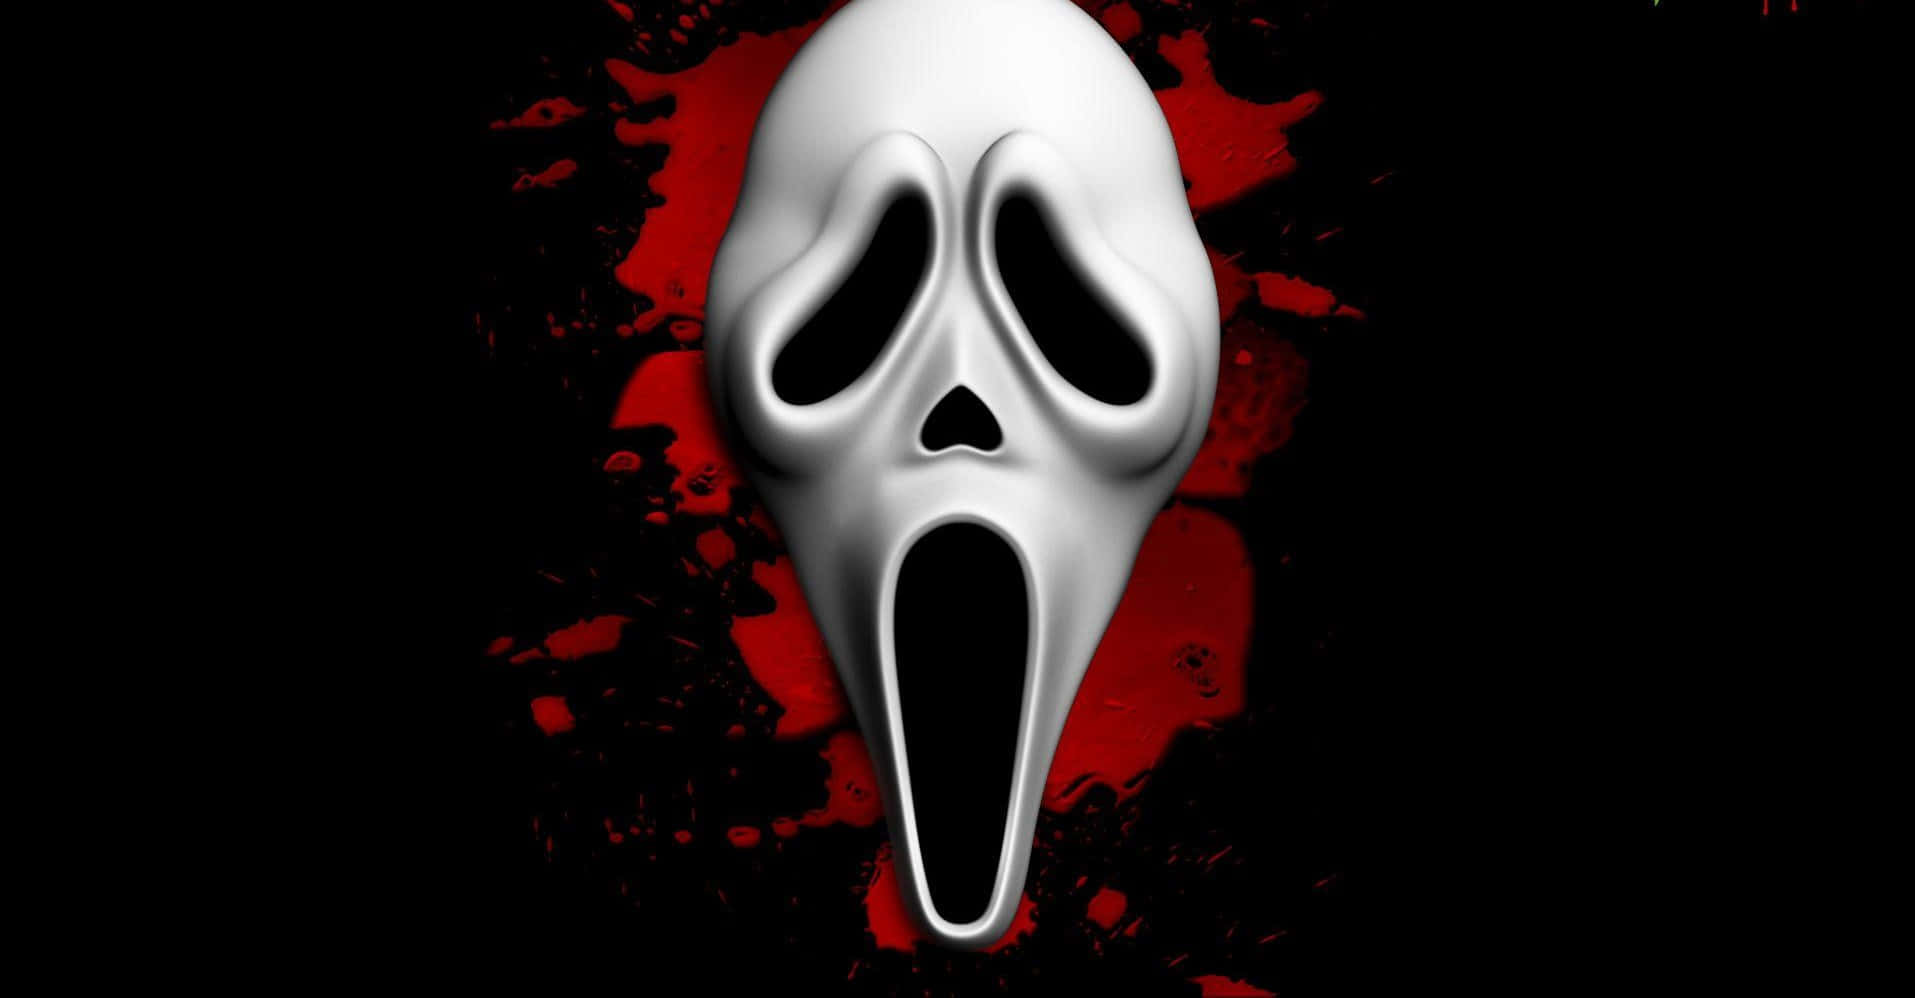 Imagendel Logo De Cara De Fantasma Con Sangre